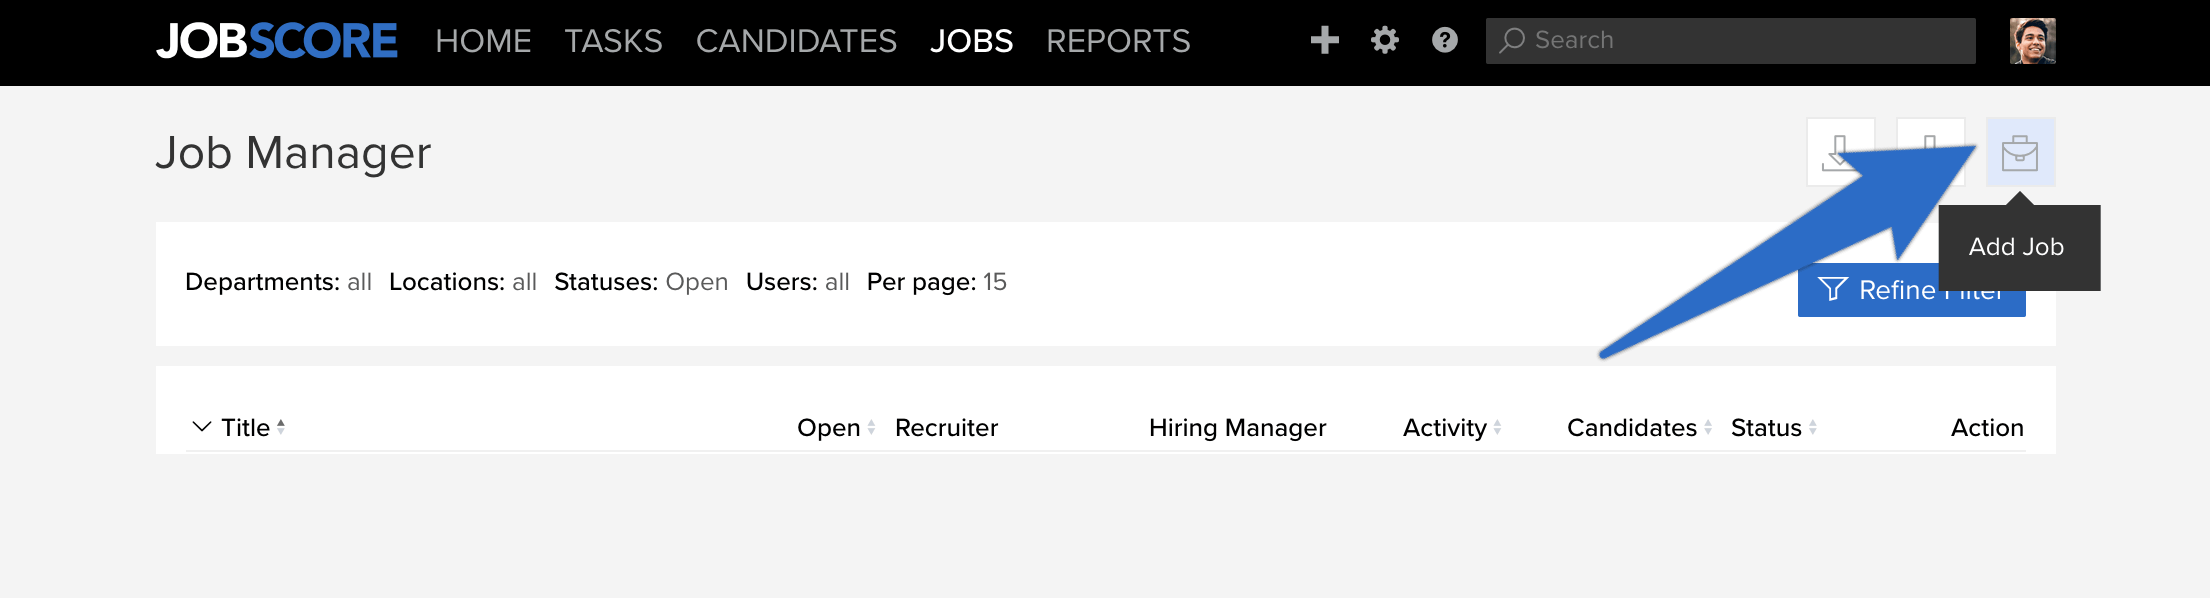 Add_Job_Button